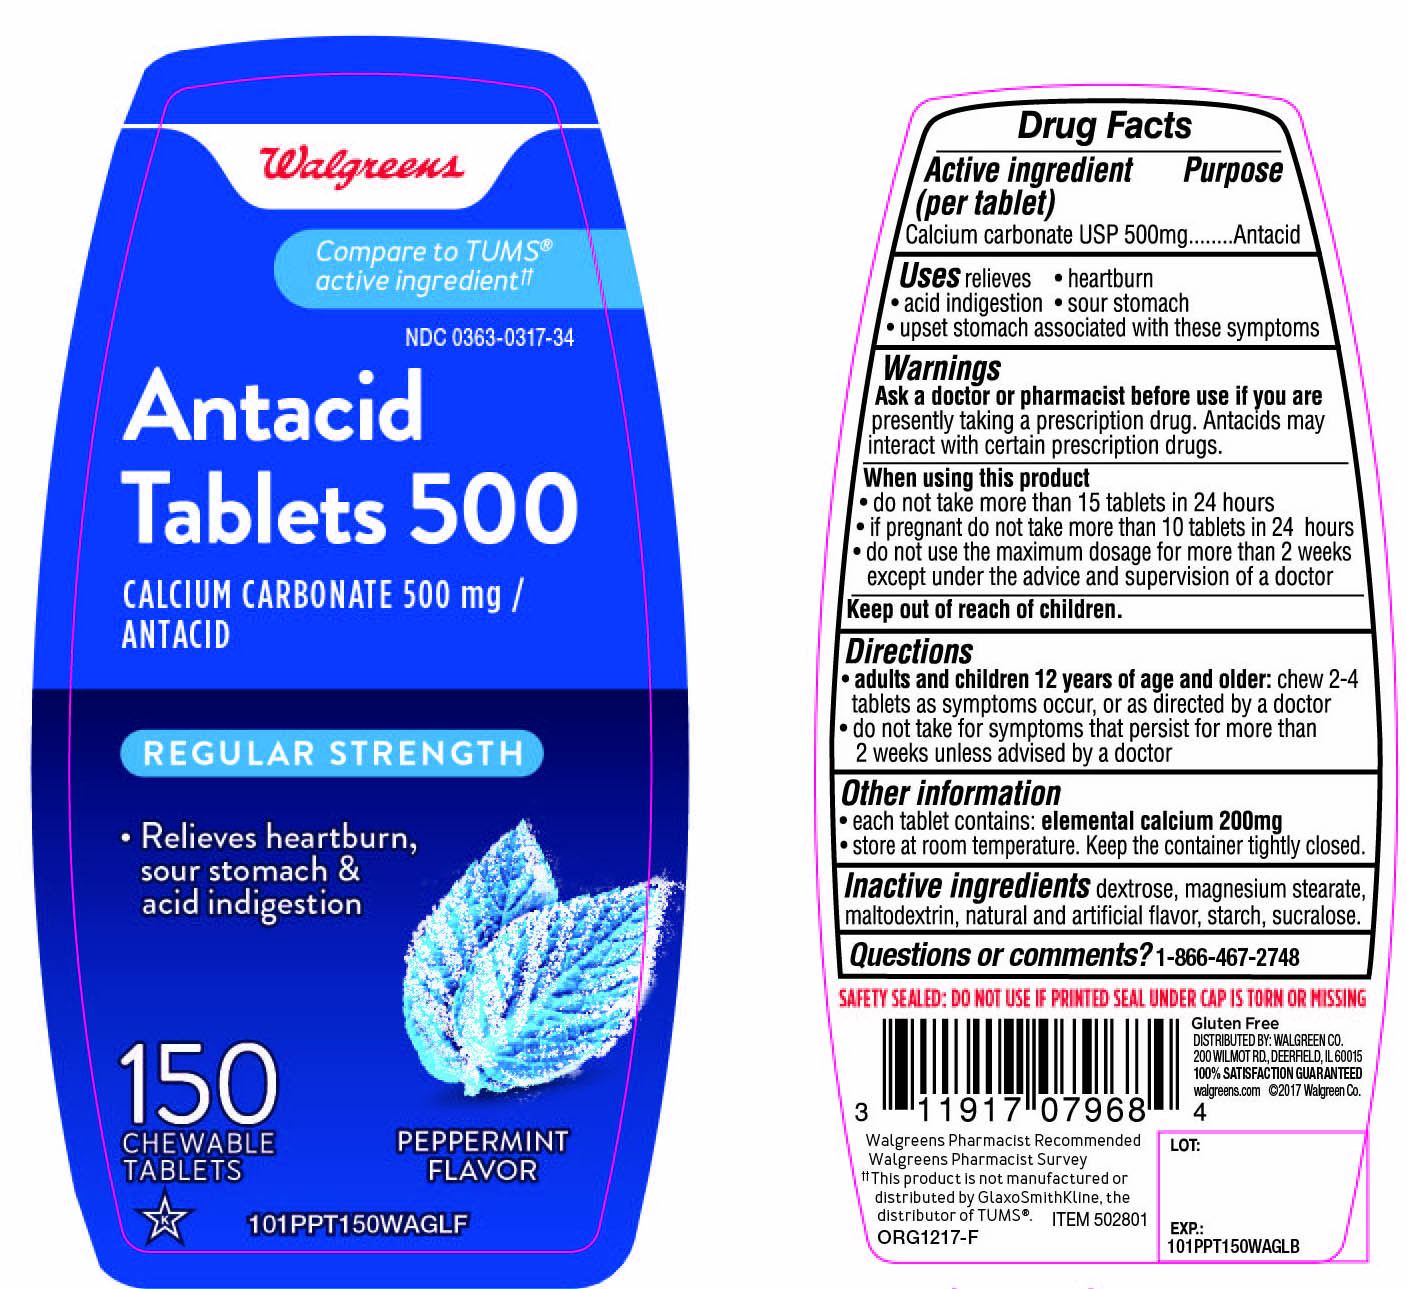 Walgreens Antacid Tablets 500 Regular Strength Peppermint Flavor 150 Chewable Tablets